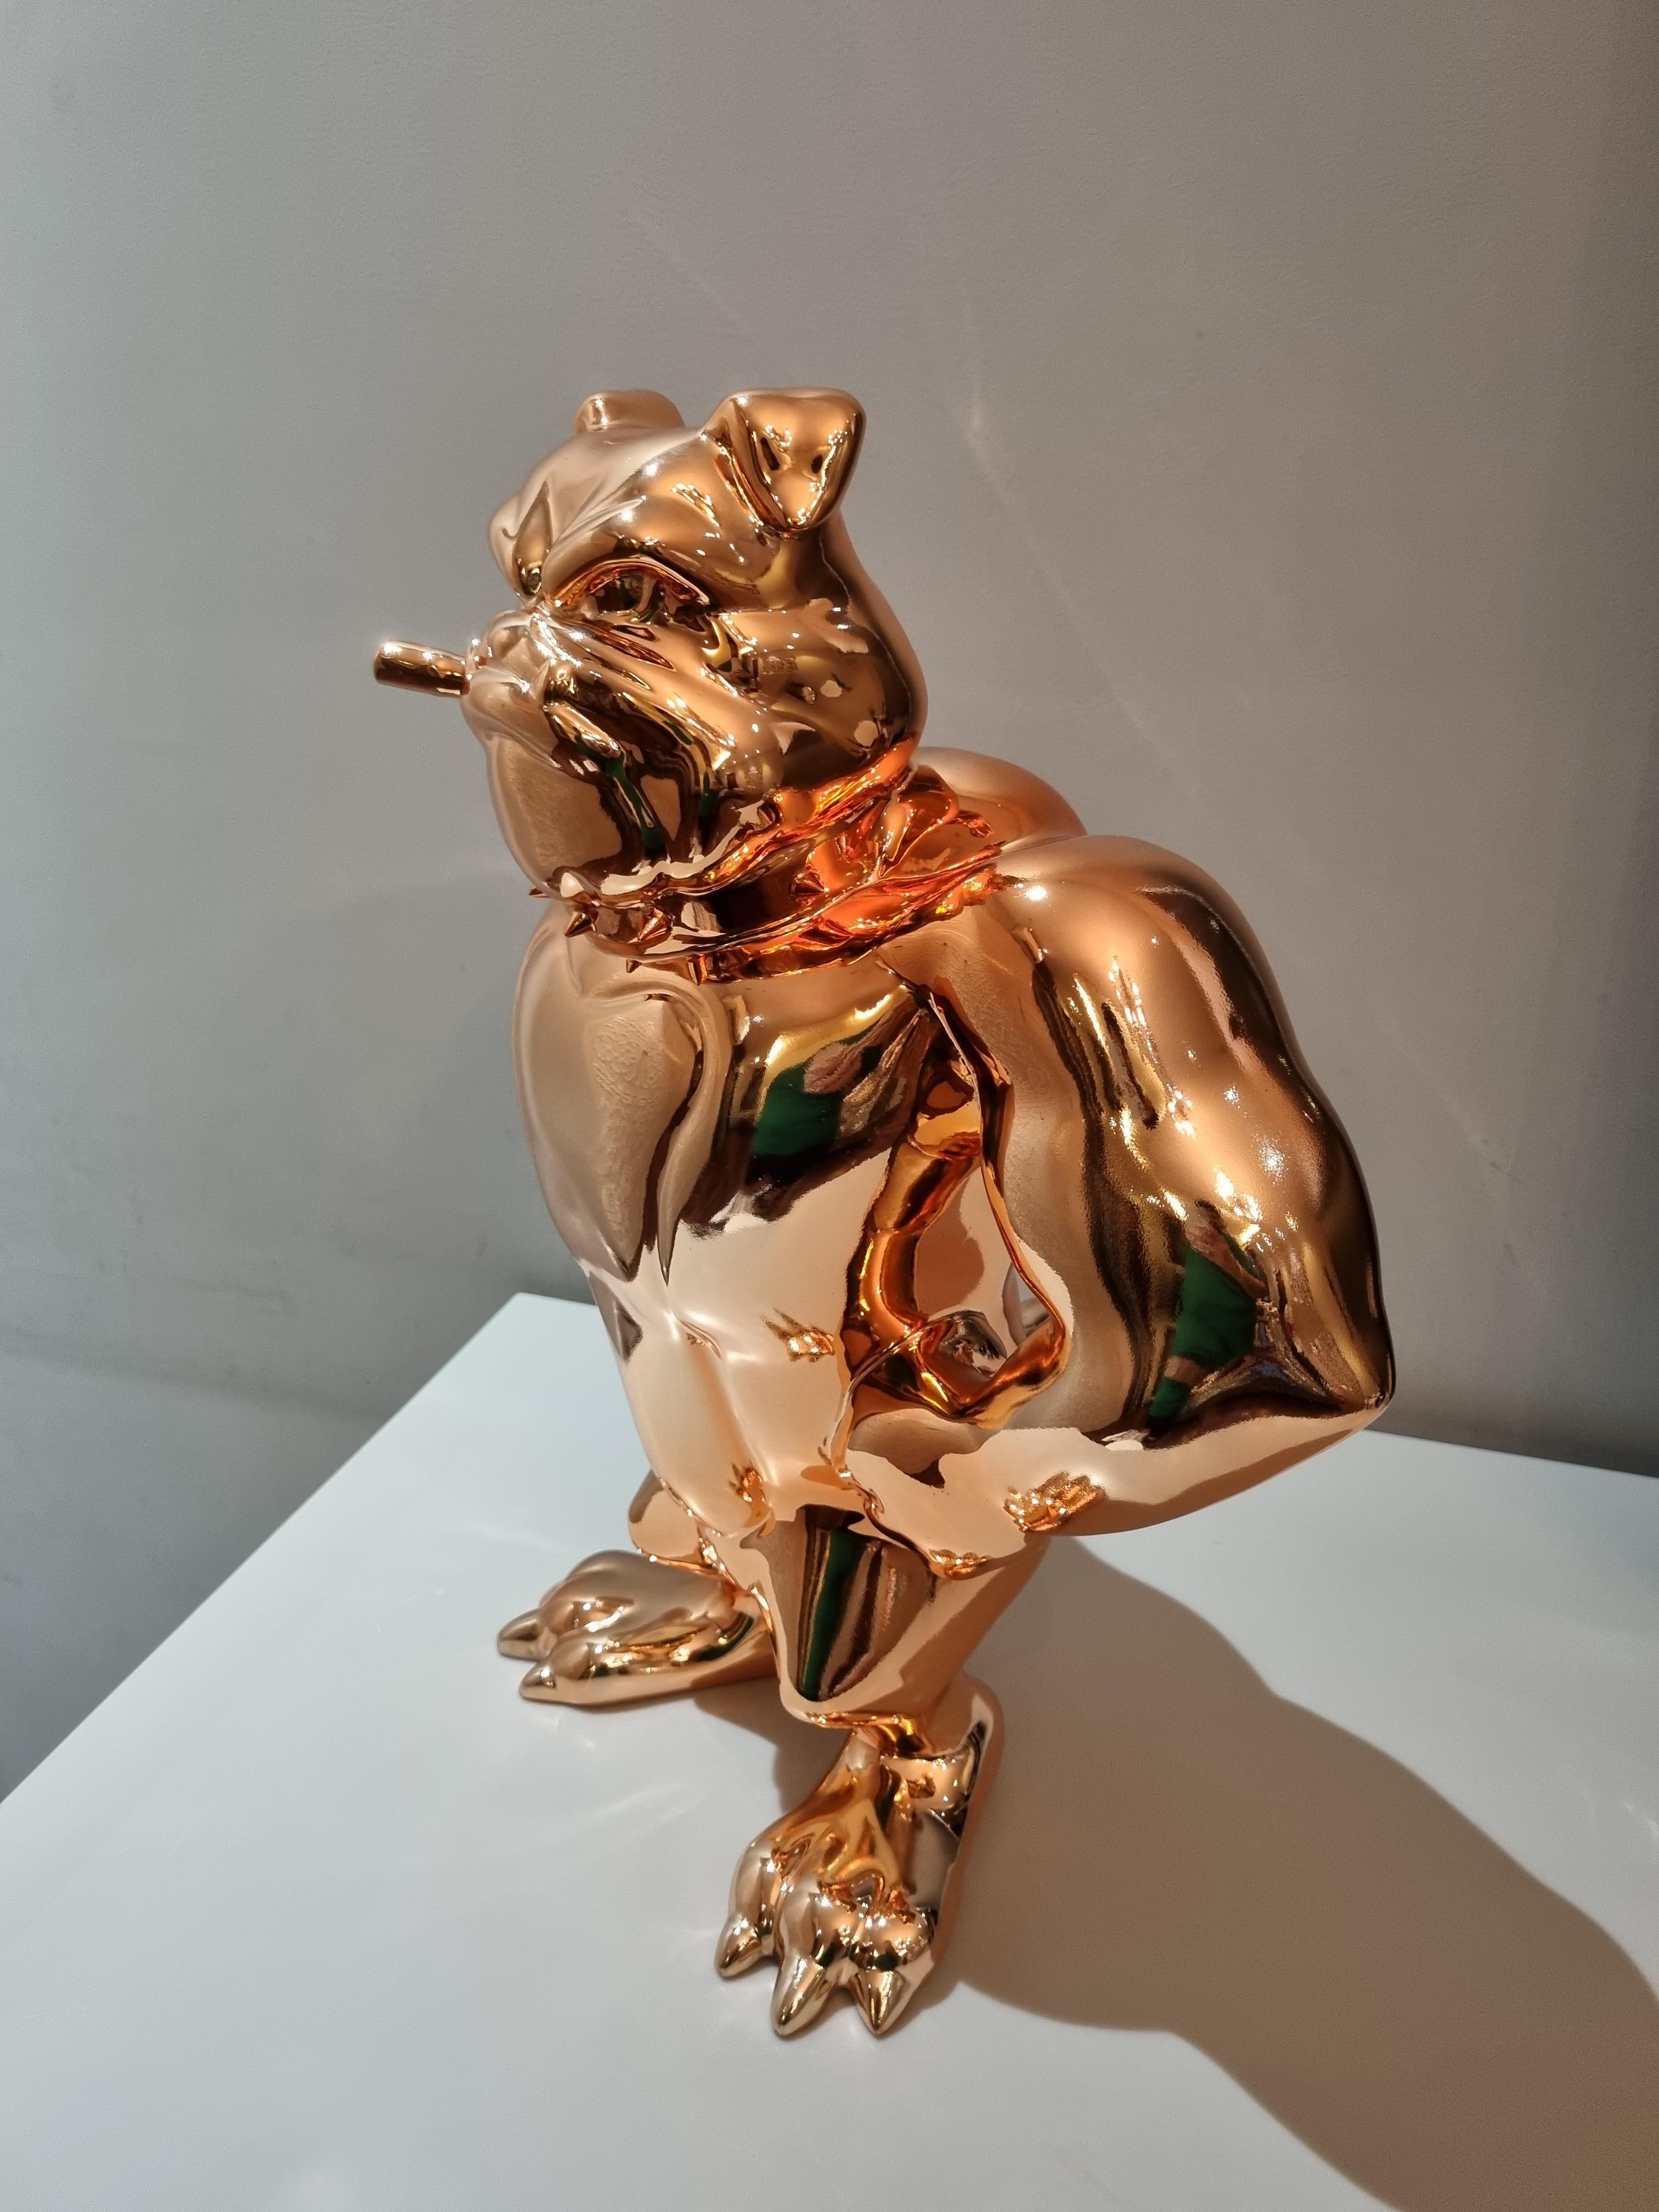 Boss Dog 2-original iconic bulldog sculpture figure-contemporary Art-artwork - Contemporary Sculpture by Sanuj Birla